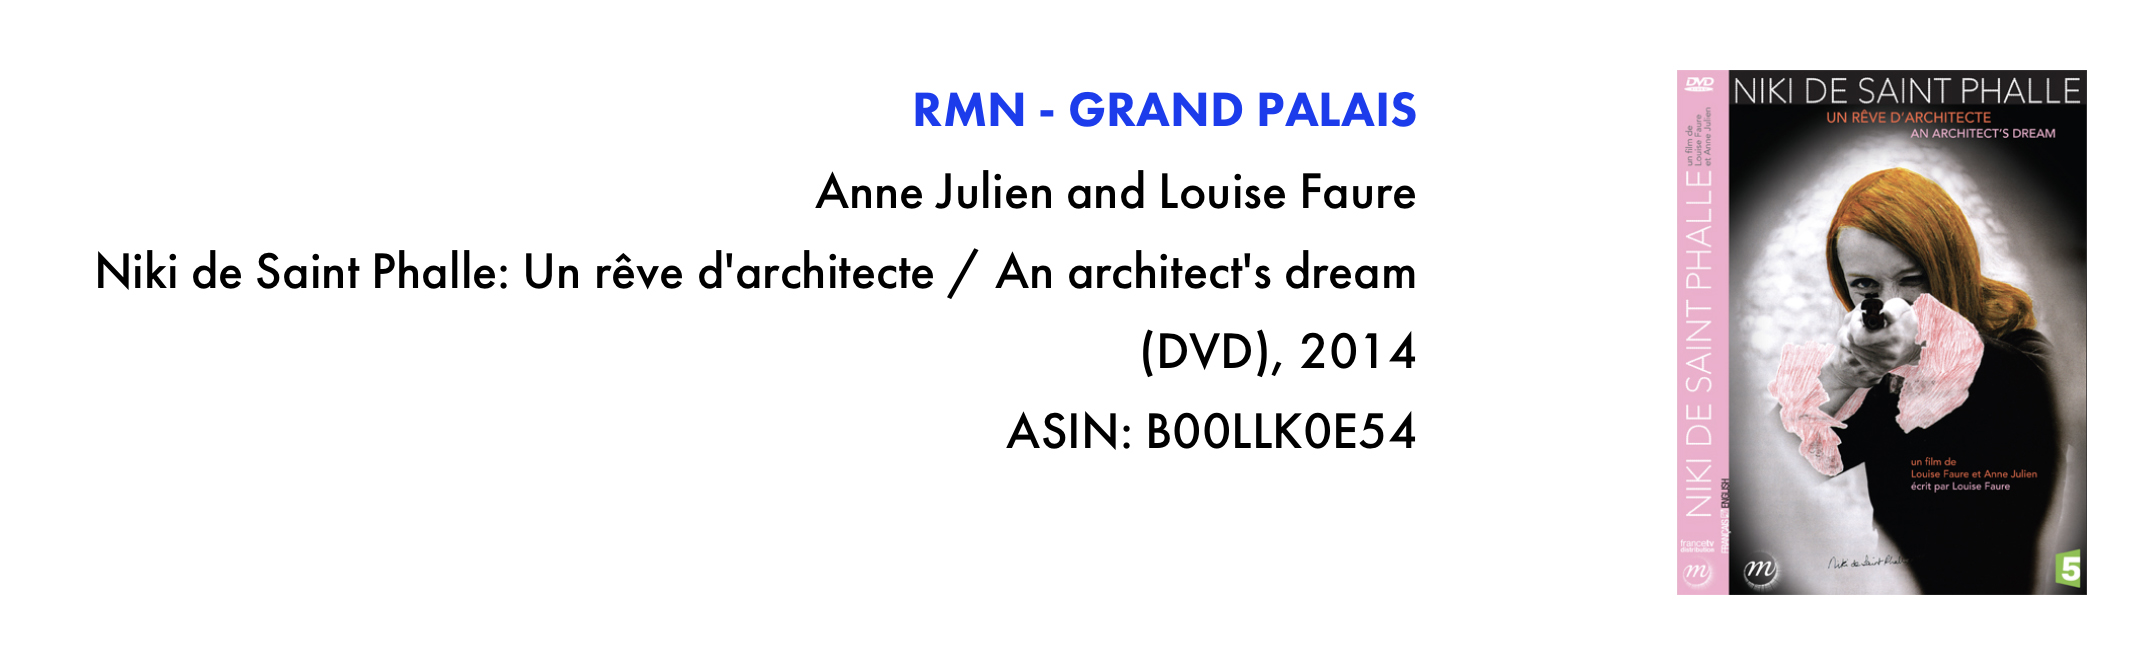 RMN Grand Palais. DVD titled Niki de Saint Phalle: An Architect's dream from 2014. ASIN number for purchase: B00LLK054